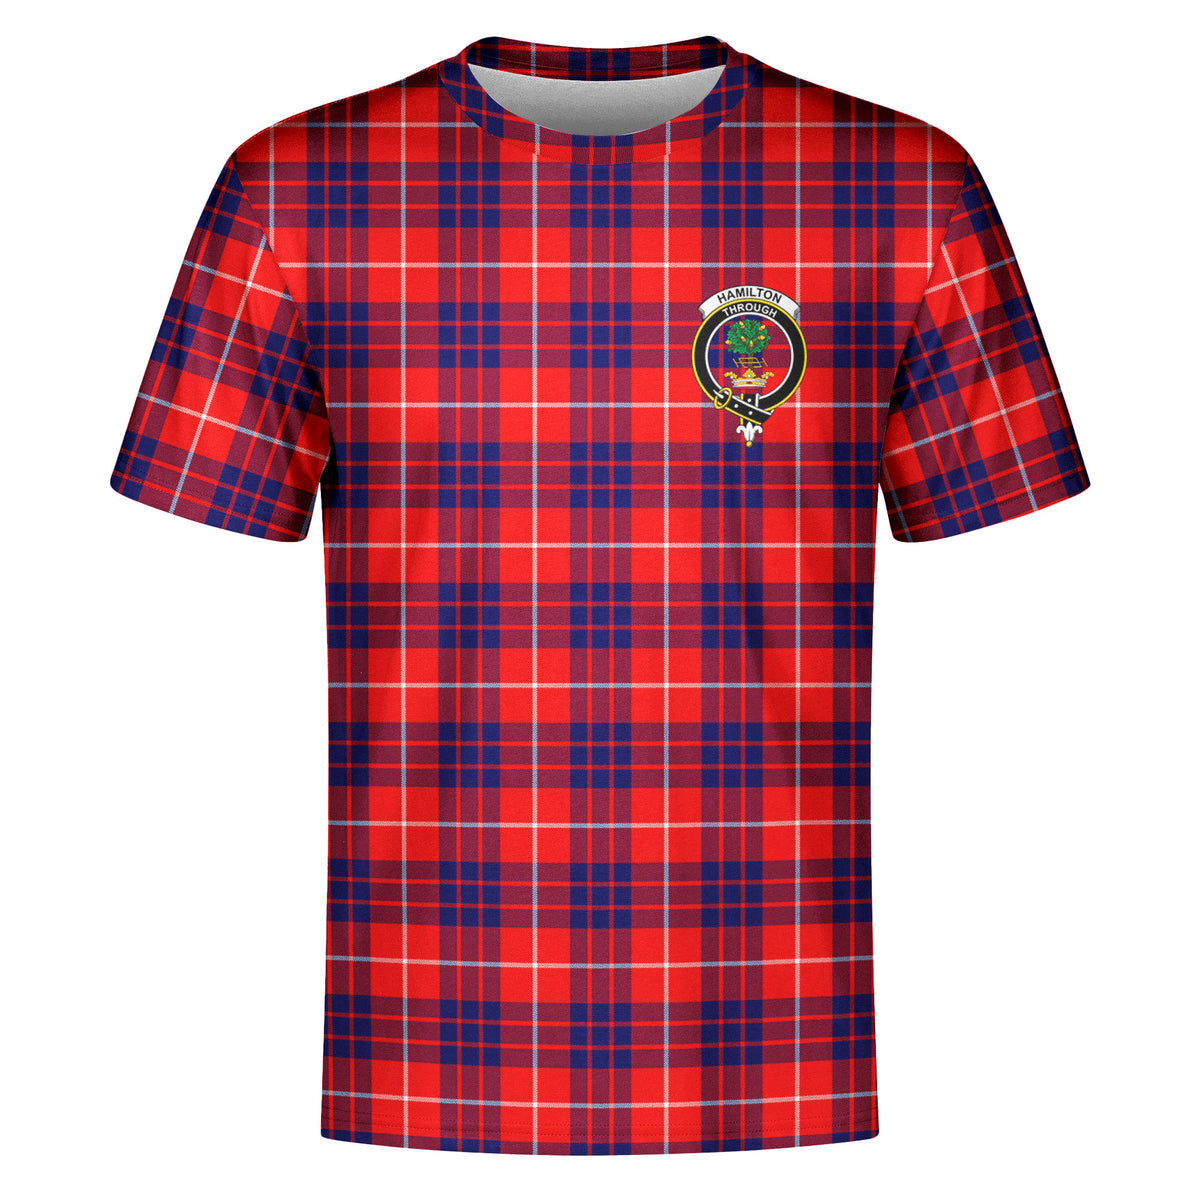 Hamilton Modern Tartan Crest T-shirt